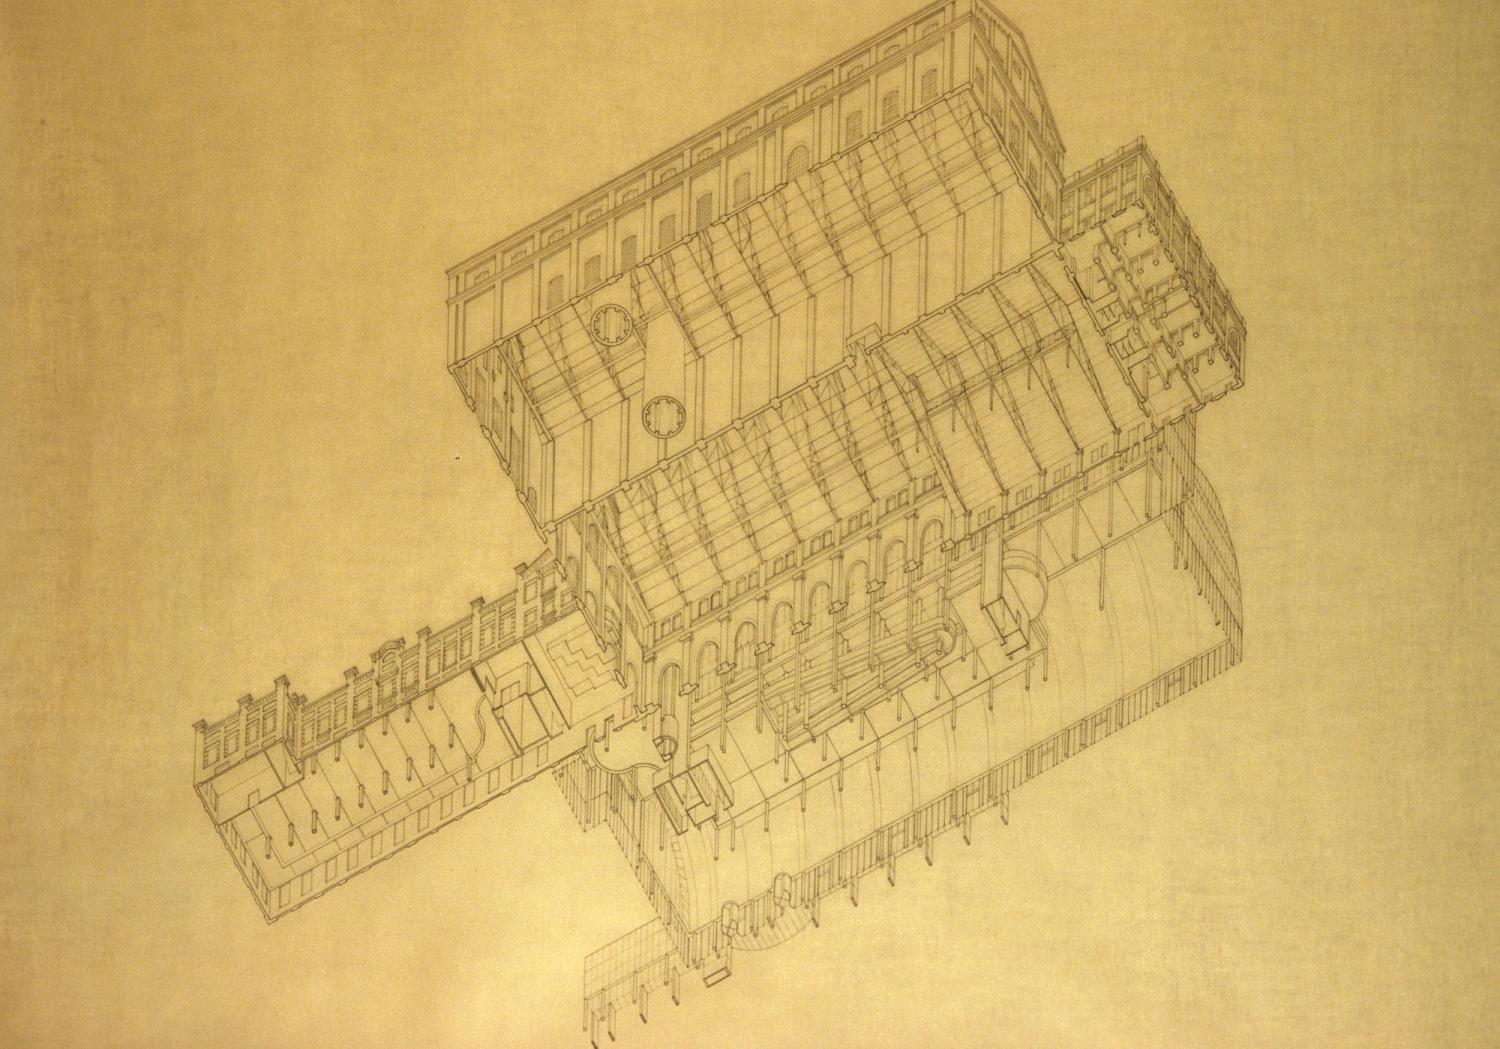 Axonometric floor plan of the new Powerhouse museum